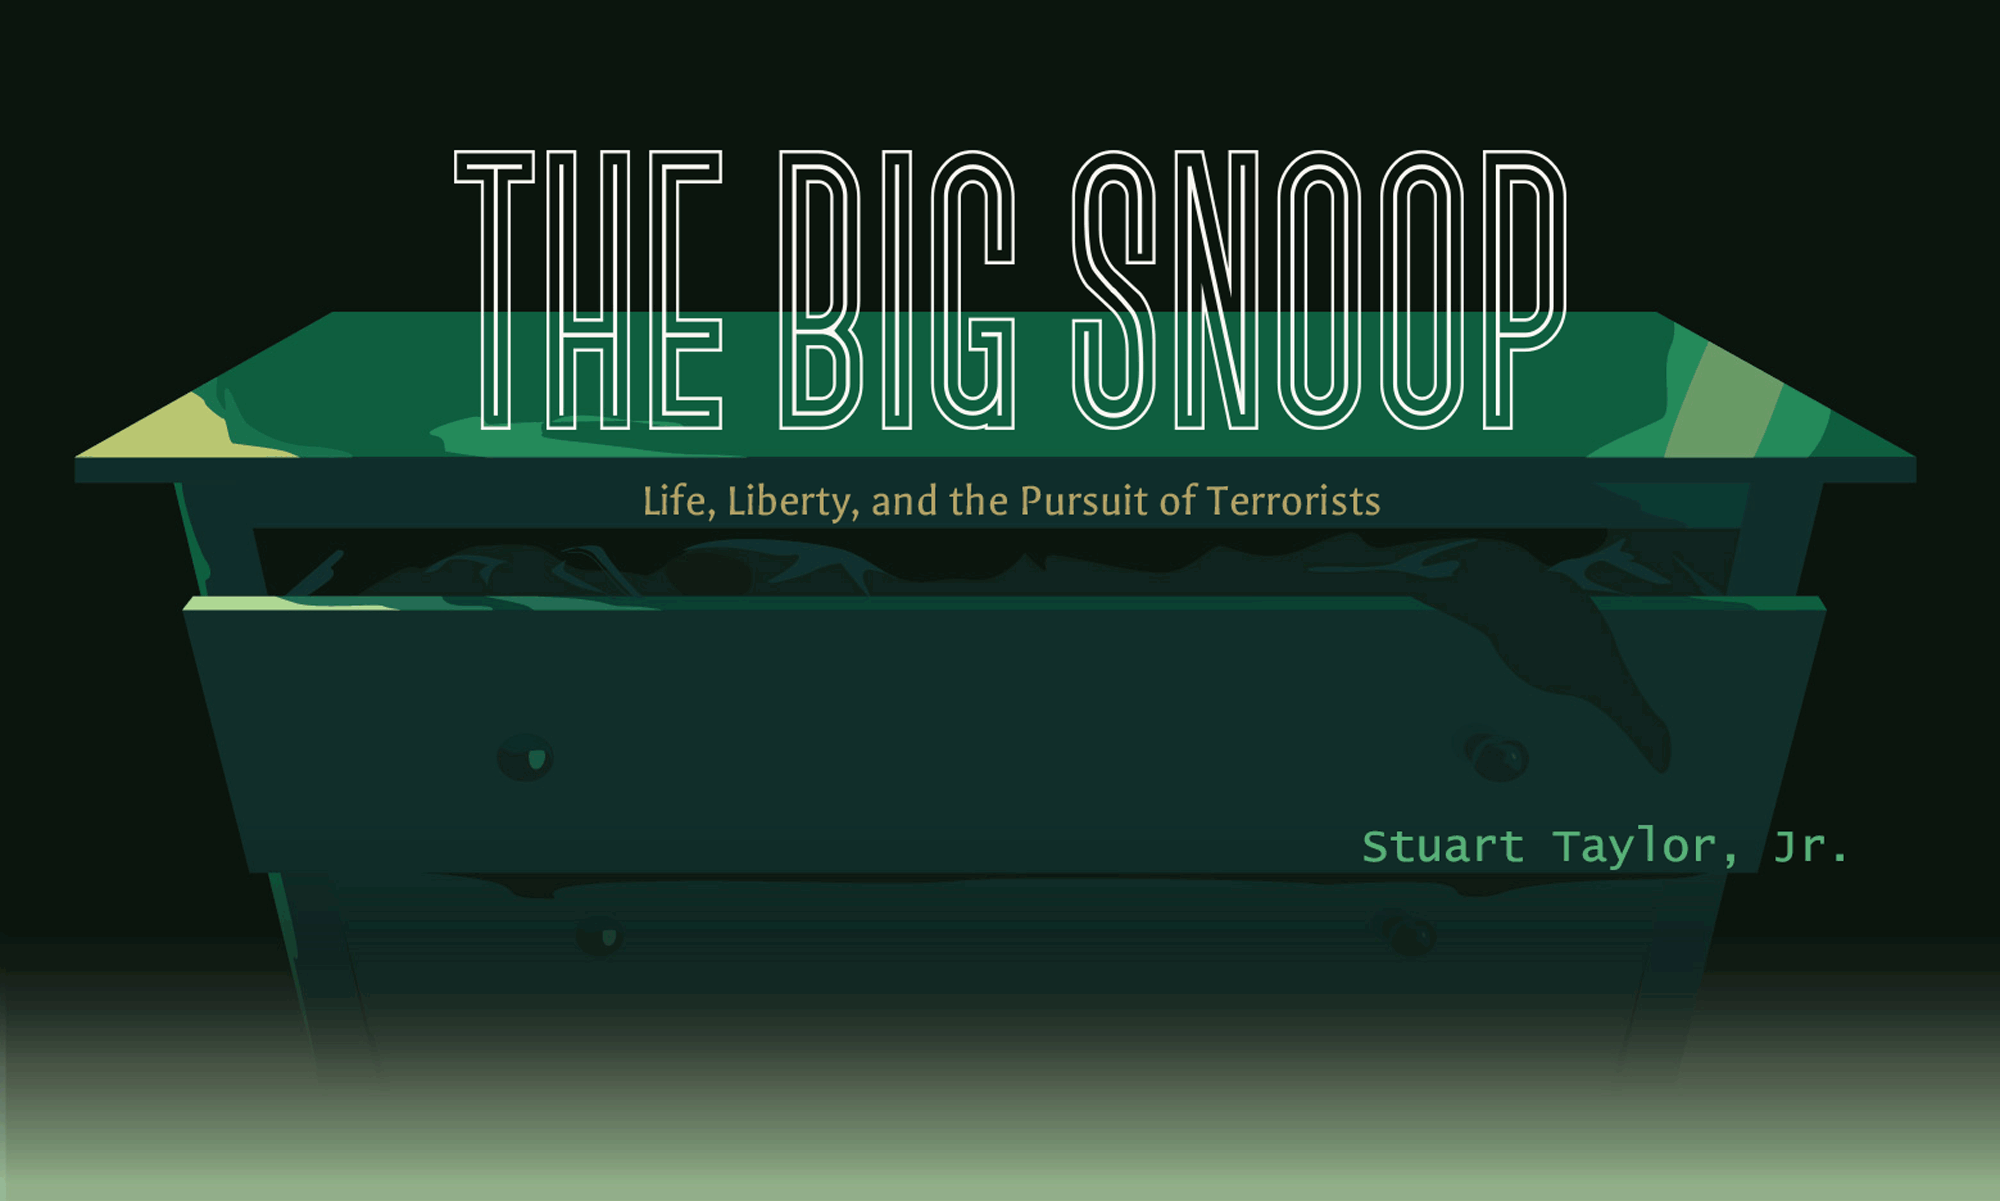 The Big Snoop